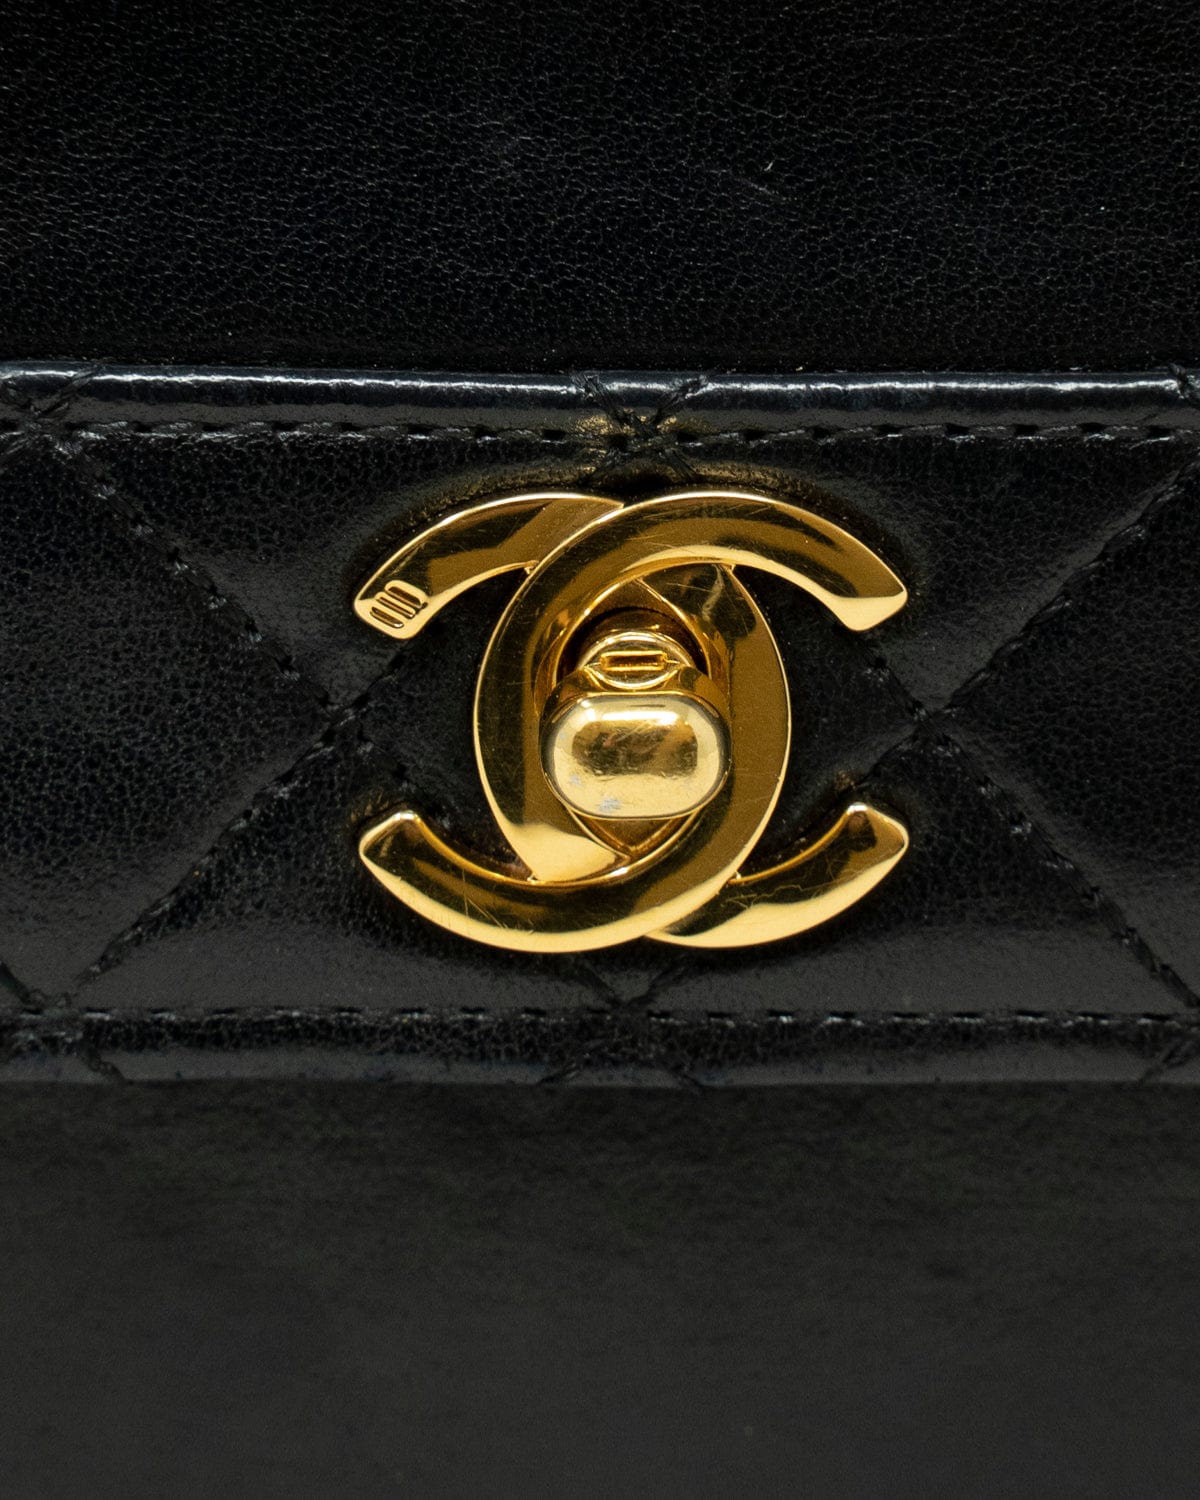 Chanel Vintage Chanel Black Trapezoid Bag & Purse - AWL2257